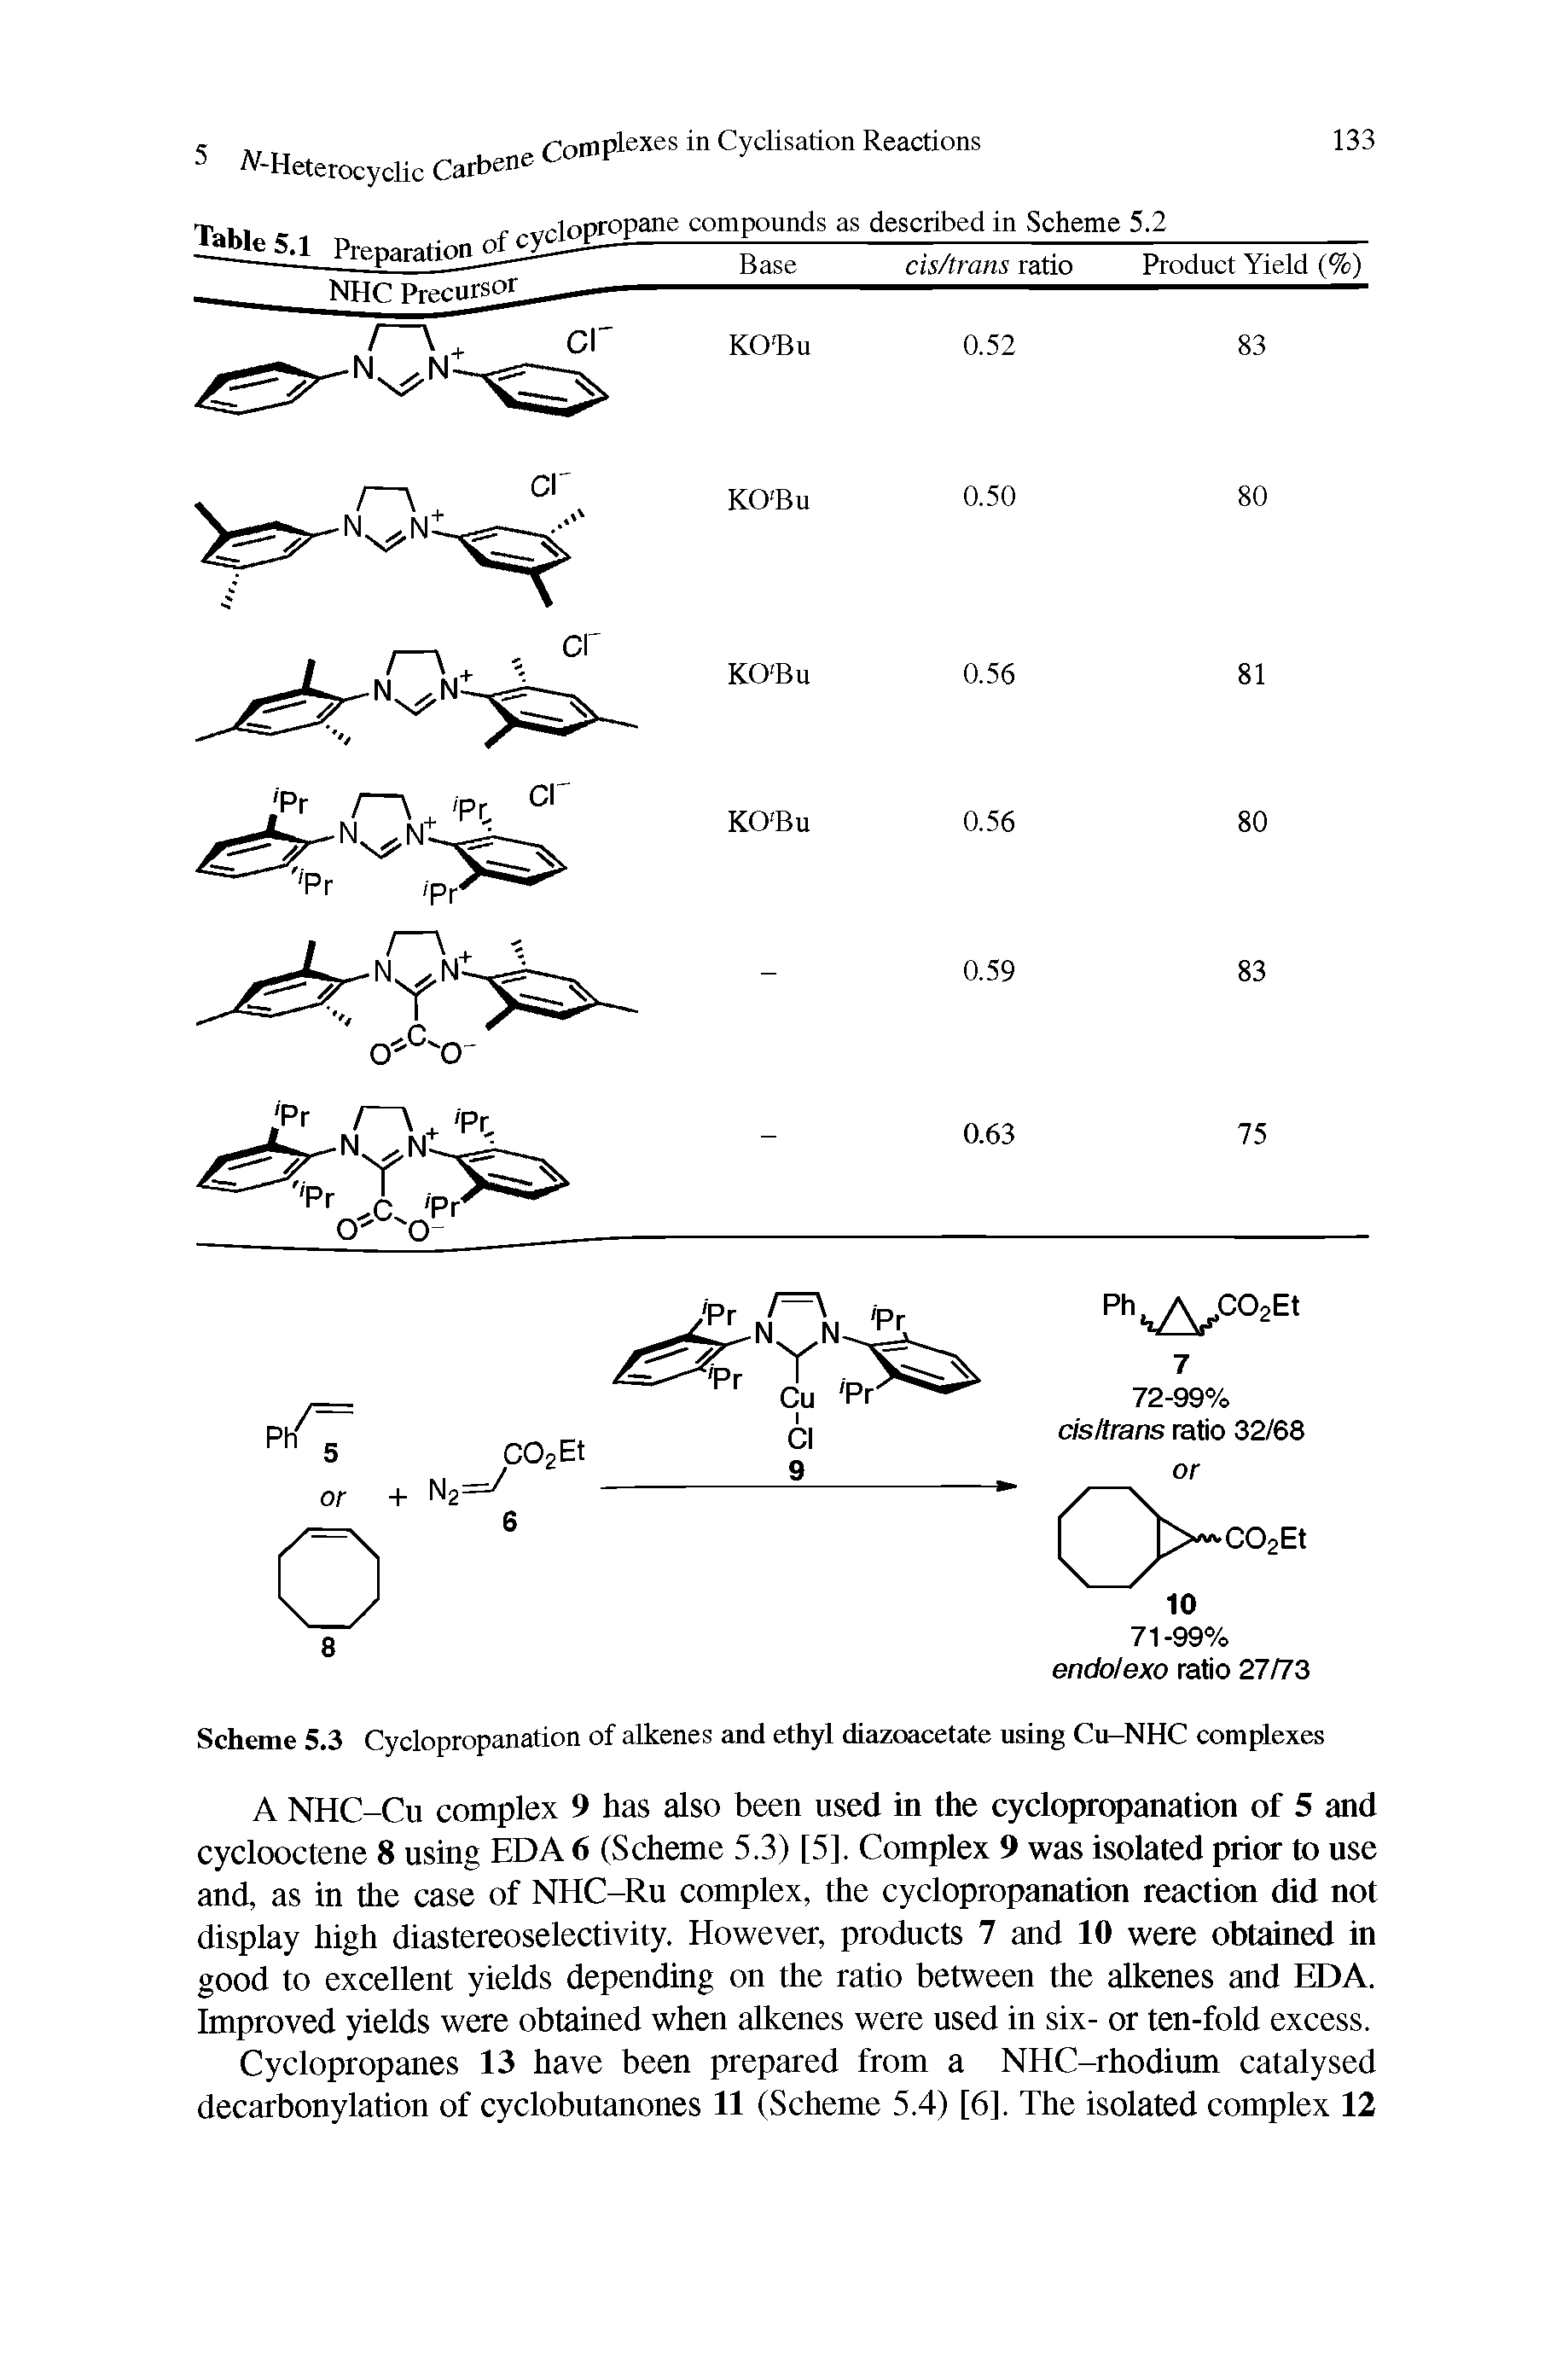 Scheme 5.3 Cyclopropanation of alkenes and ethyl diazoacetate using Cu-NHC complexes...